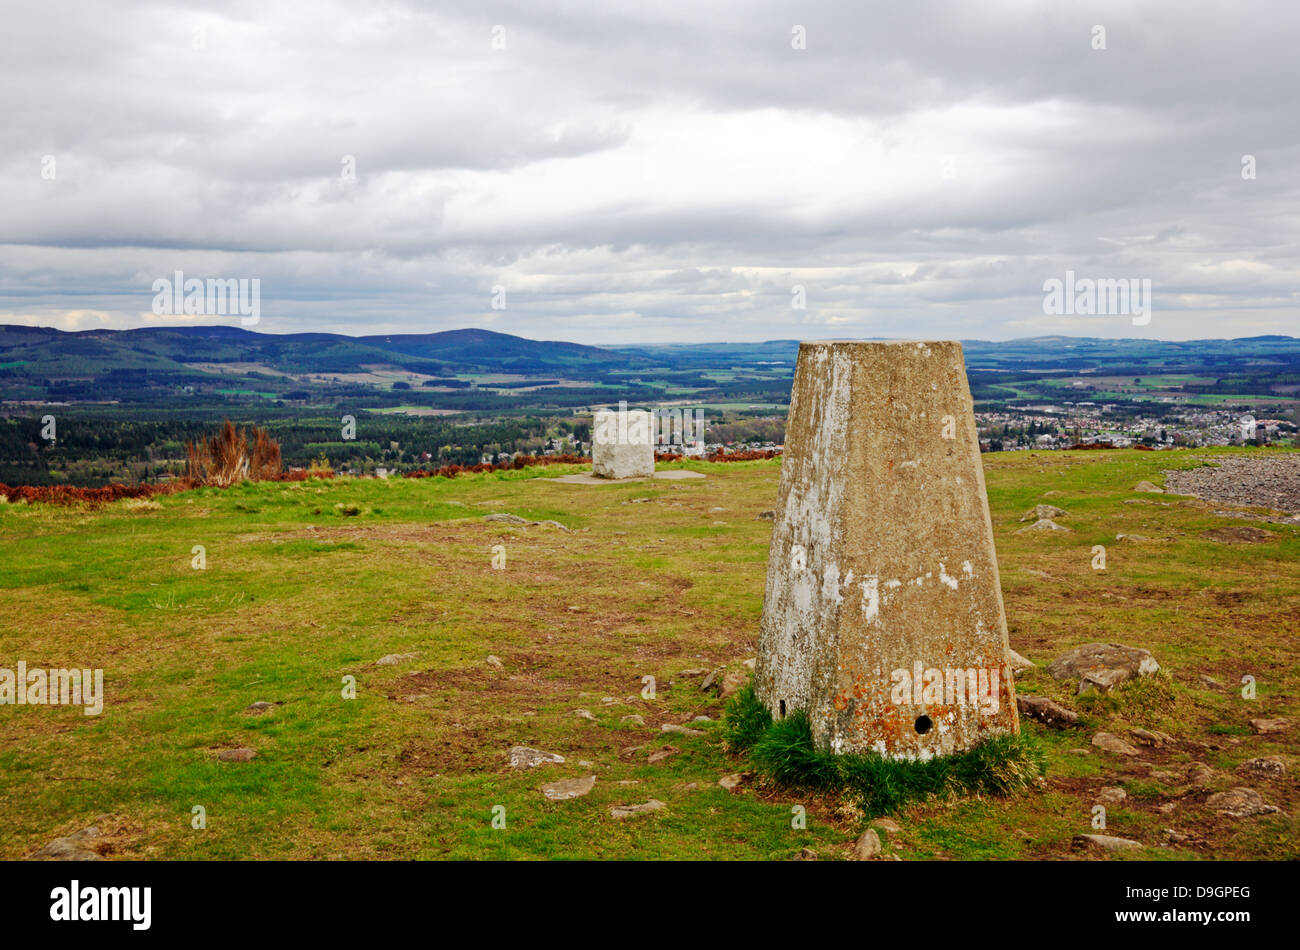 A trigonometrical point on the summit of Scolty Hill near Banchory, Scotland, United Kingdom. Stock Photo